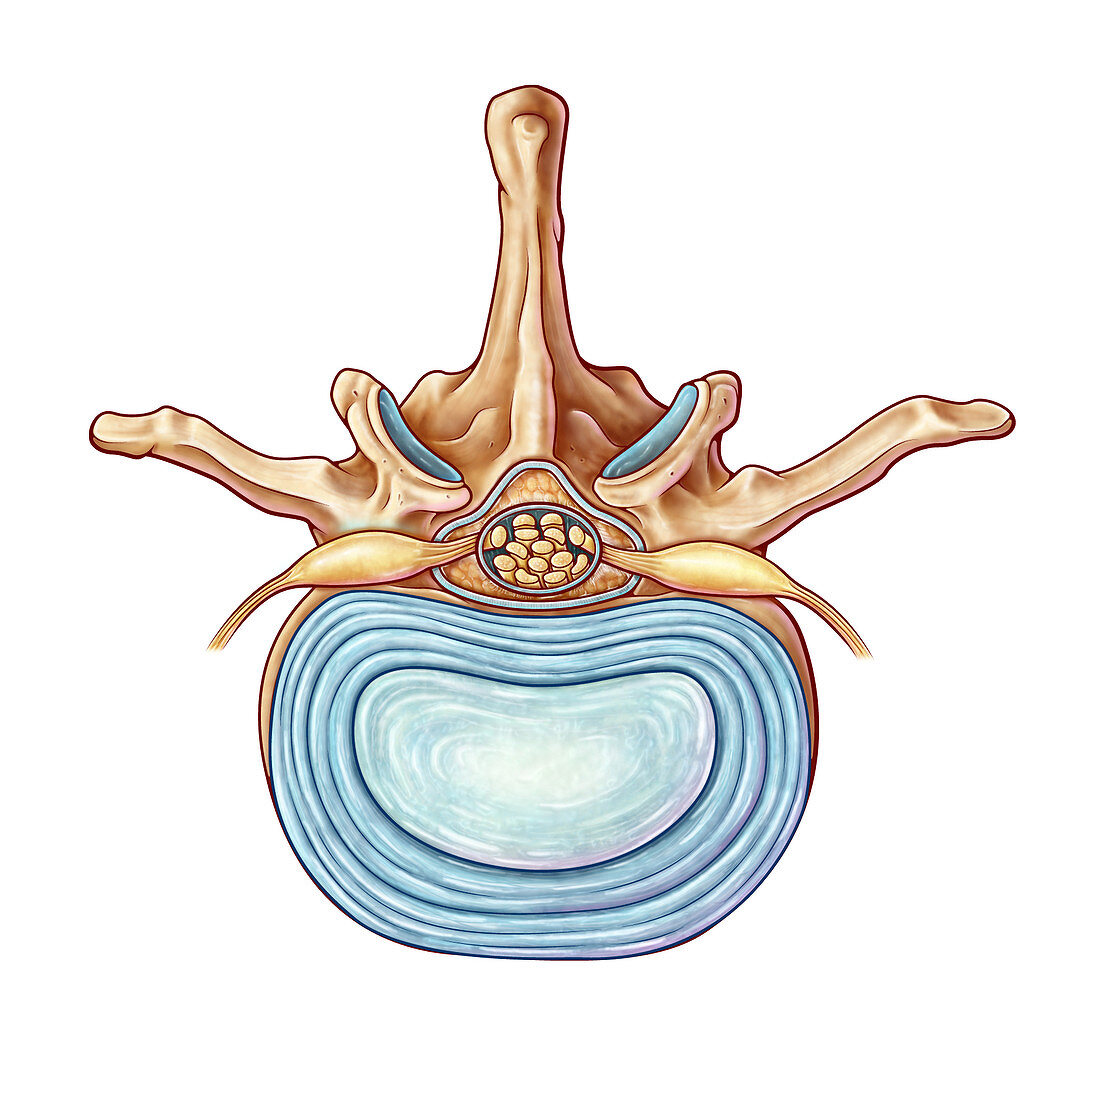 Lumbar Vertebra and Disk, illustration